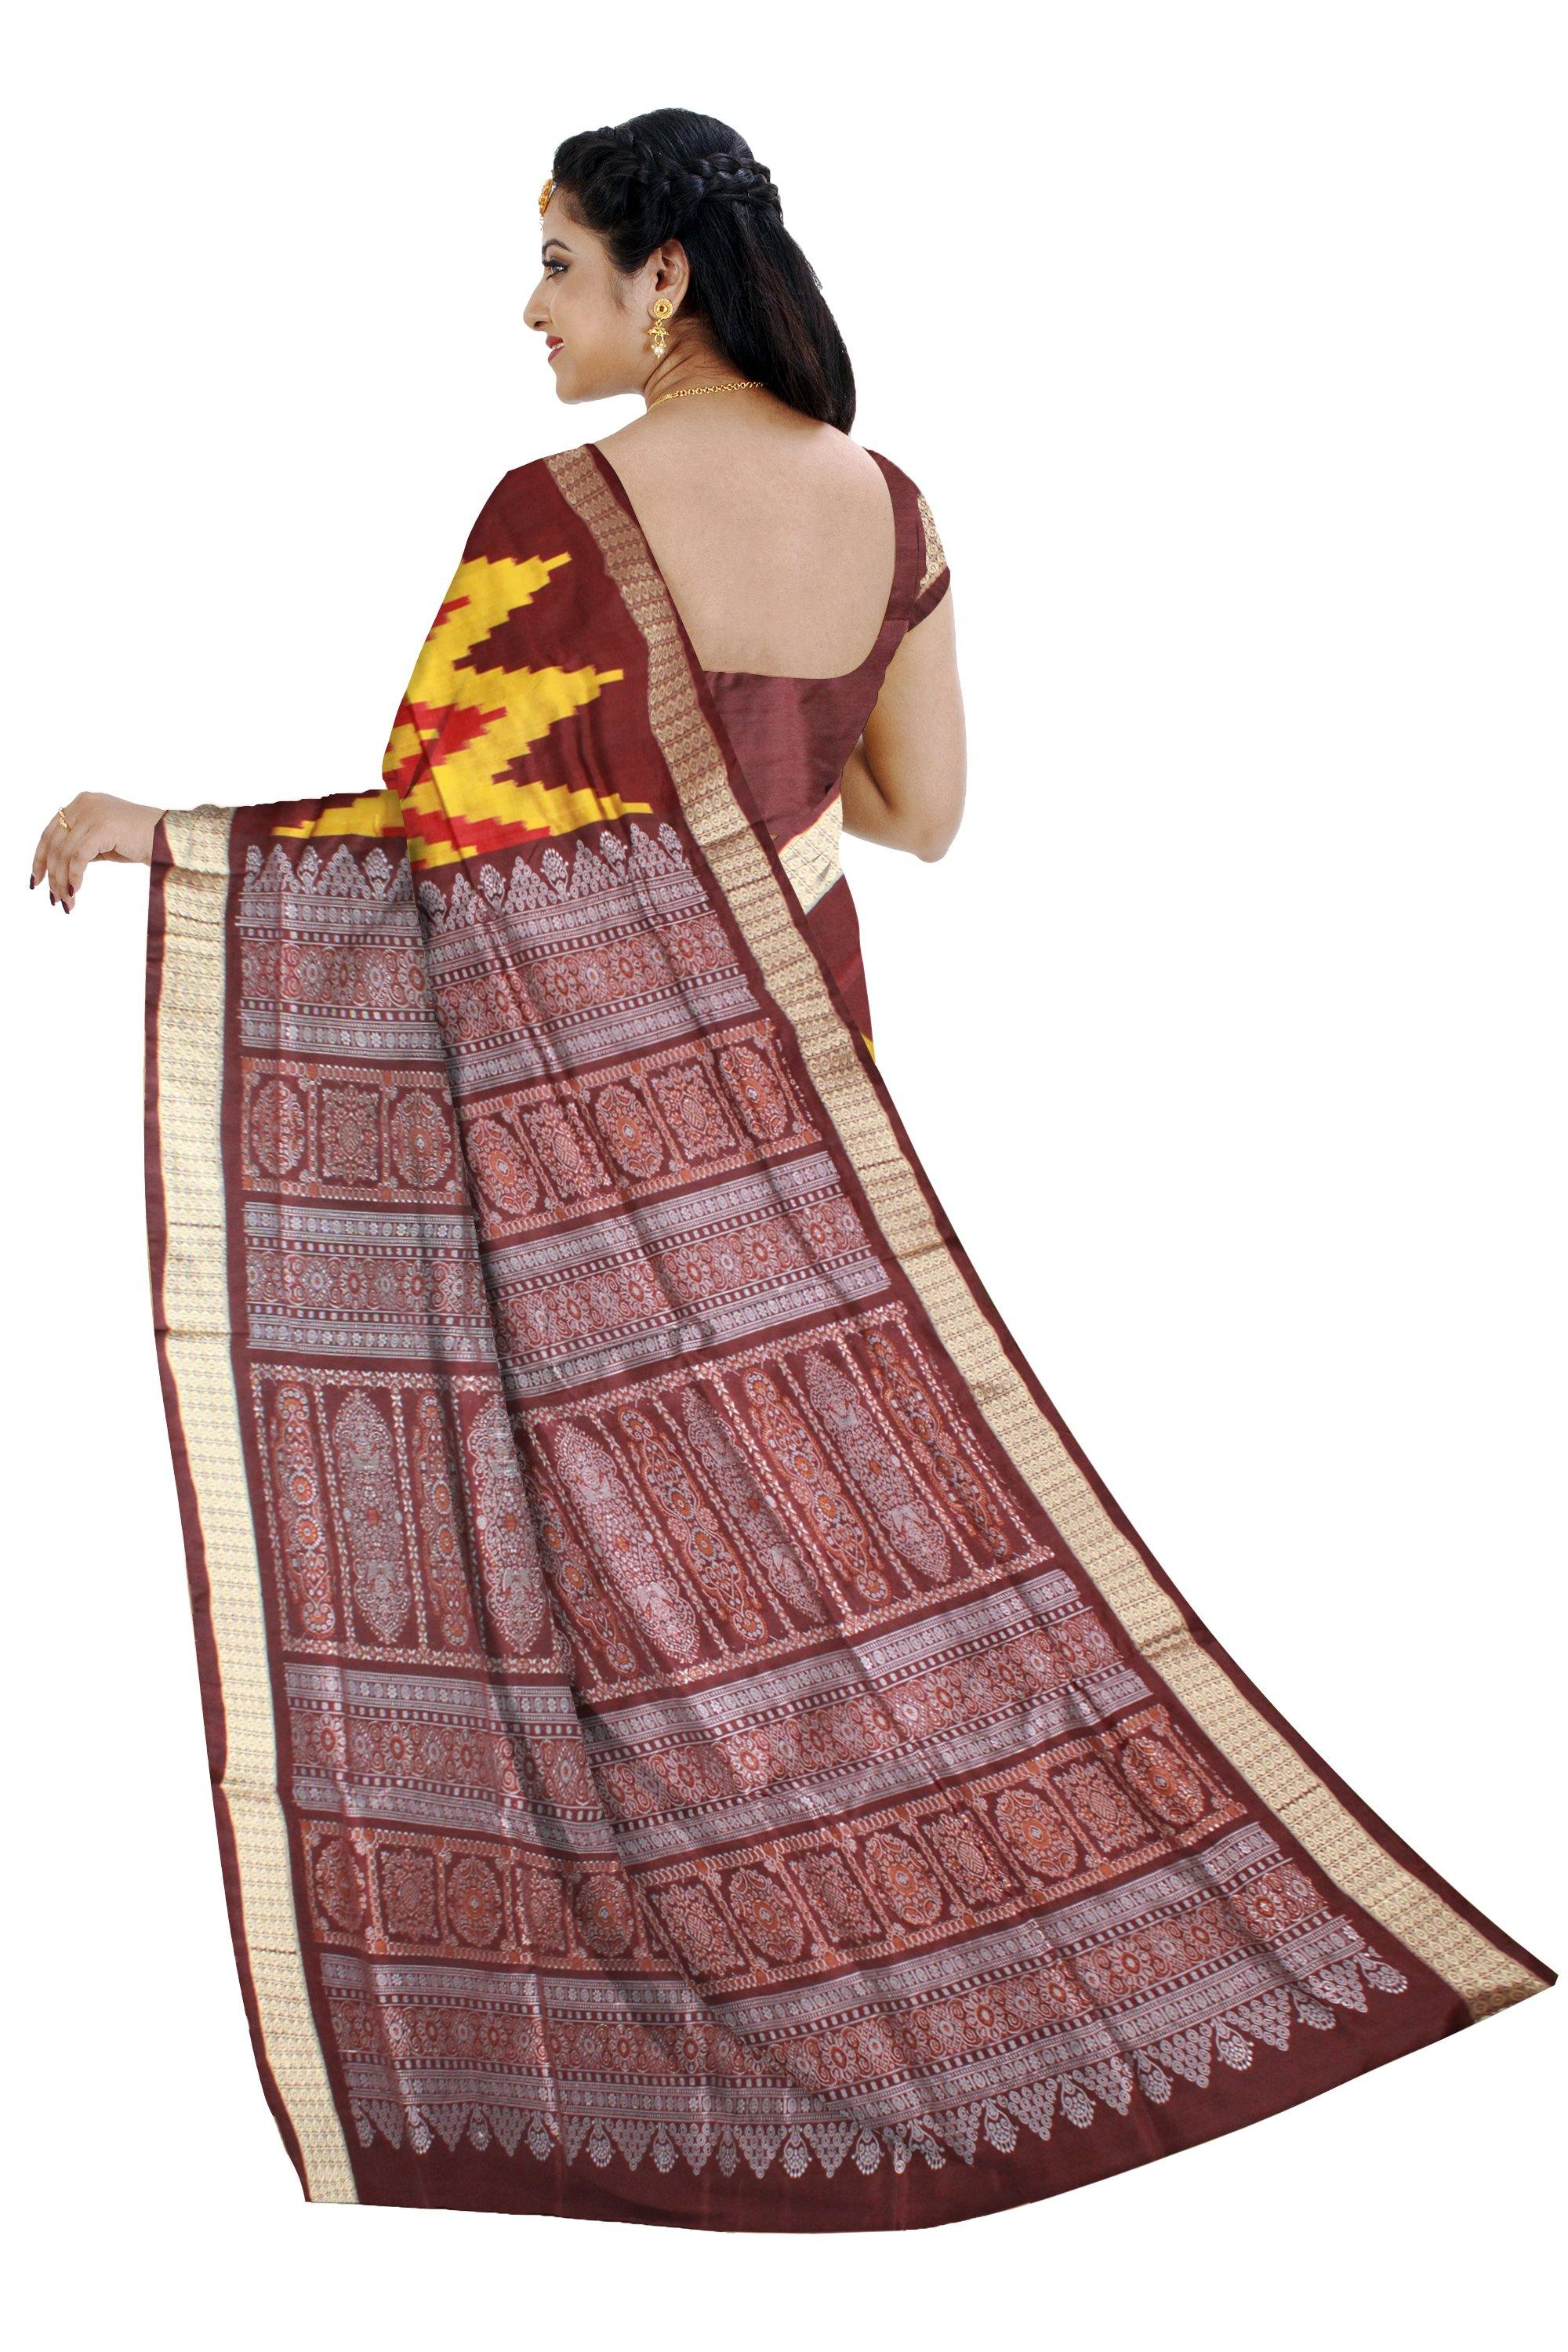 Zigzag design Yellow and brown mix Pata saree with blouse piece - Koshali Arts & Crafts Enterprise